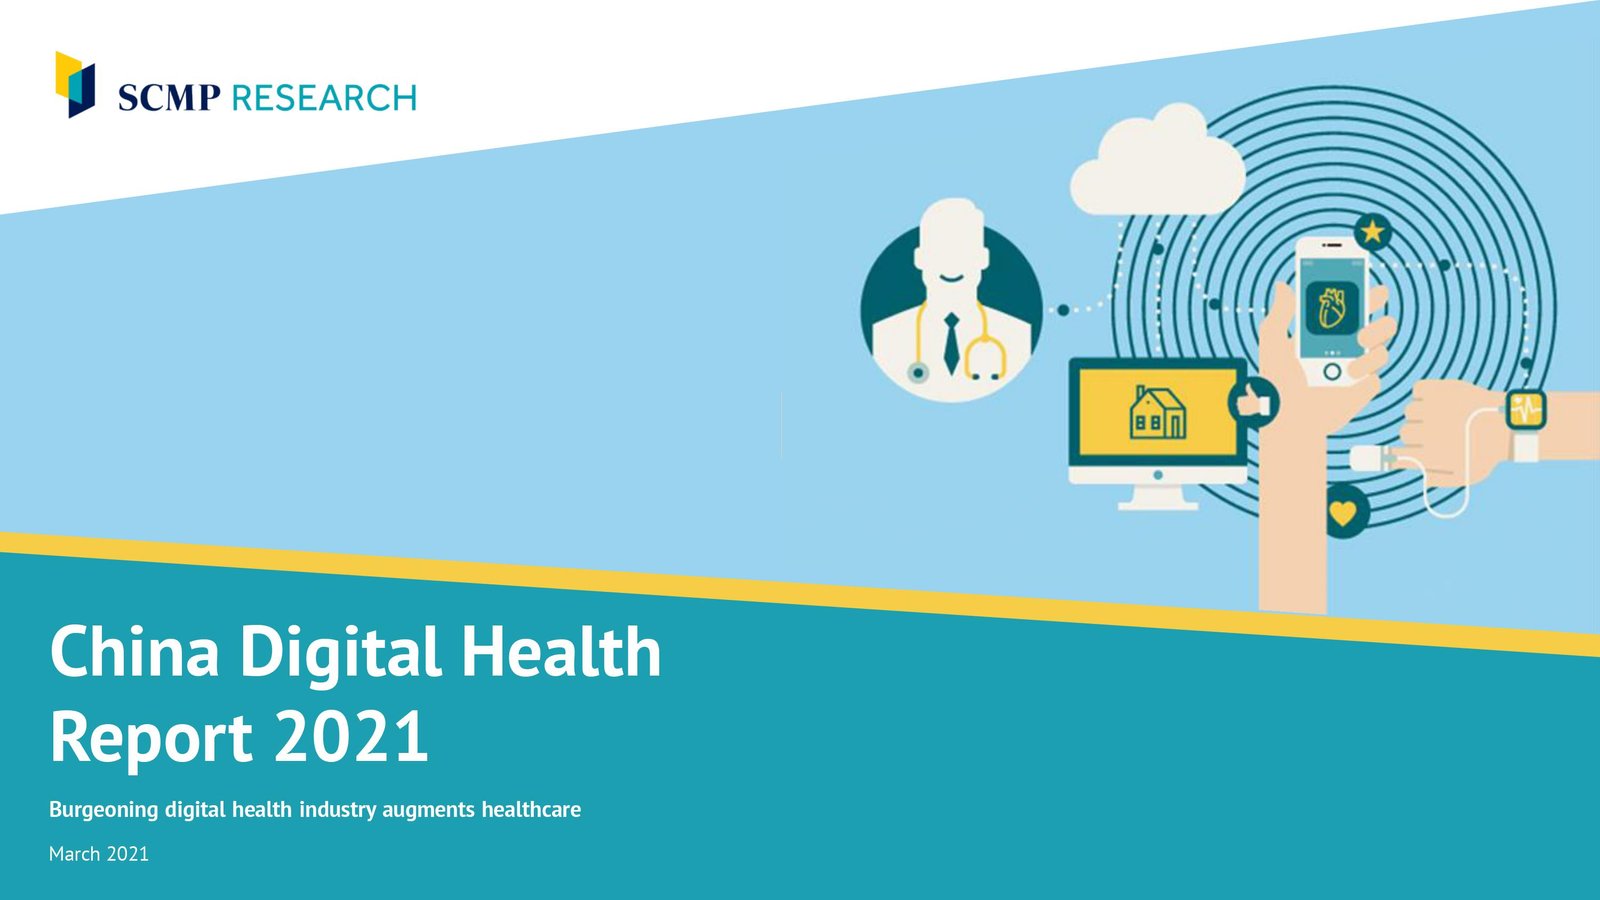 Image Caption: China Digital Health Report 2021